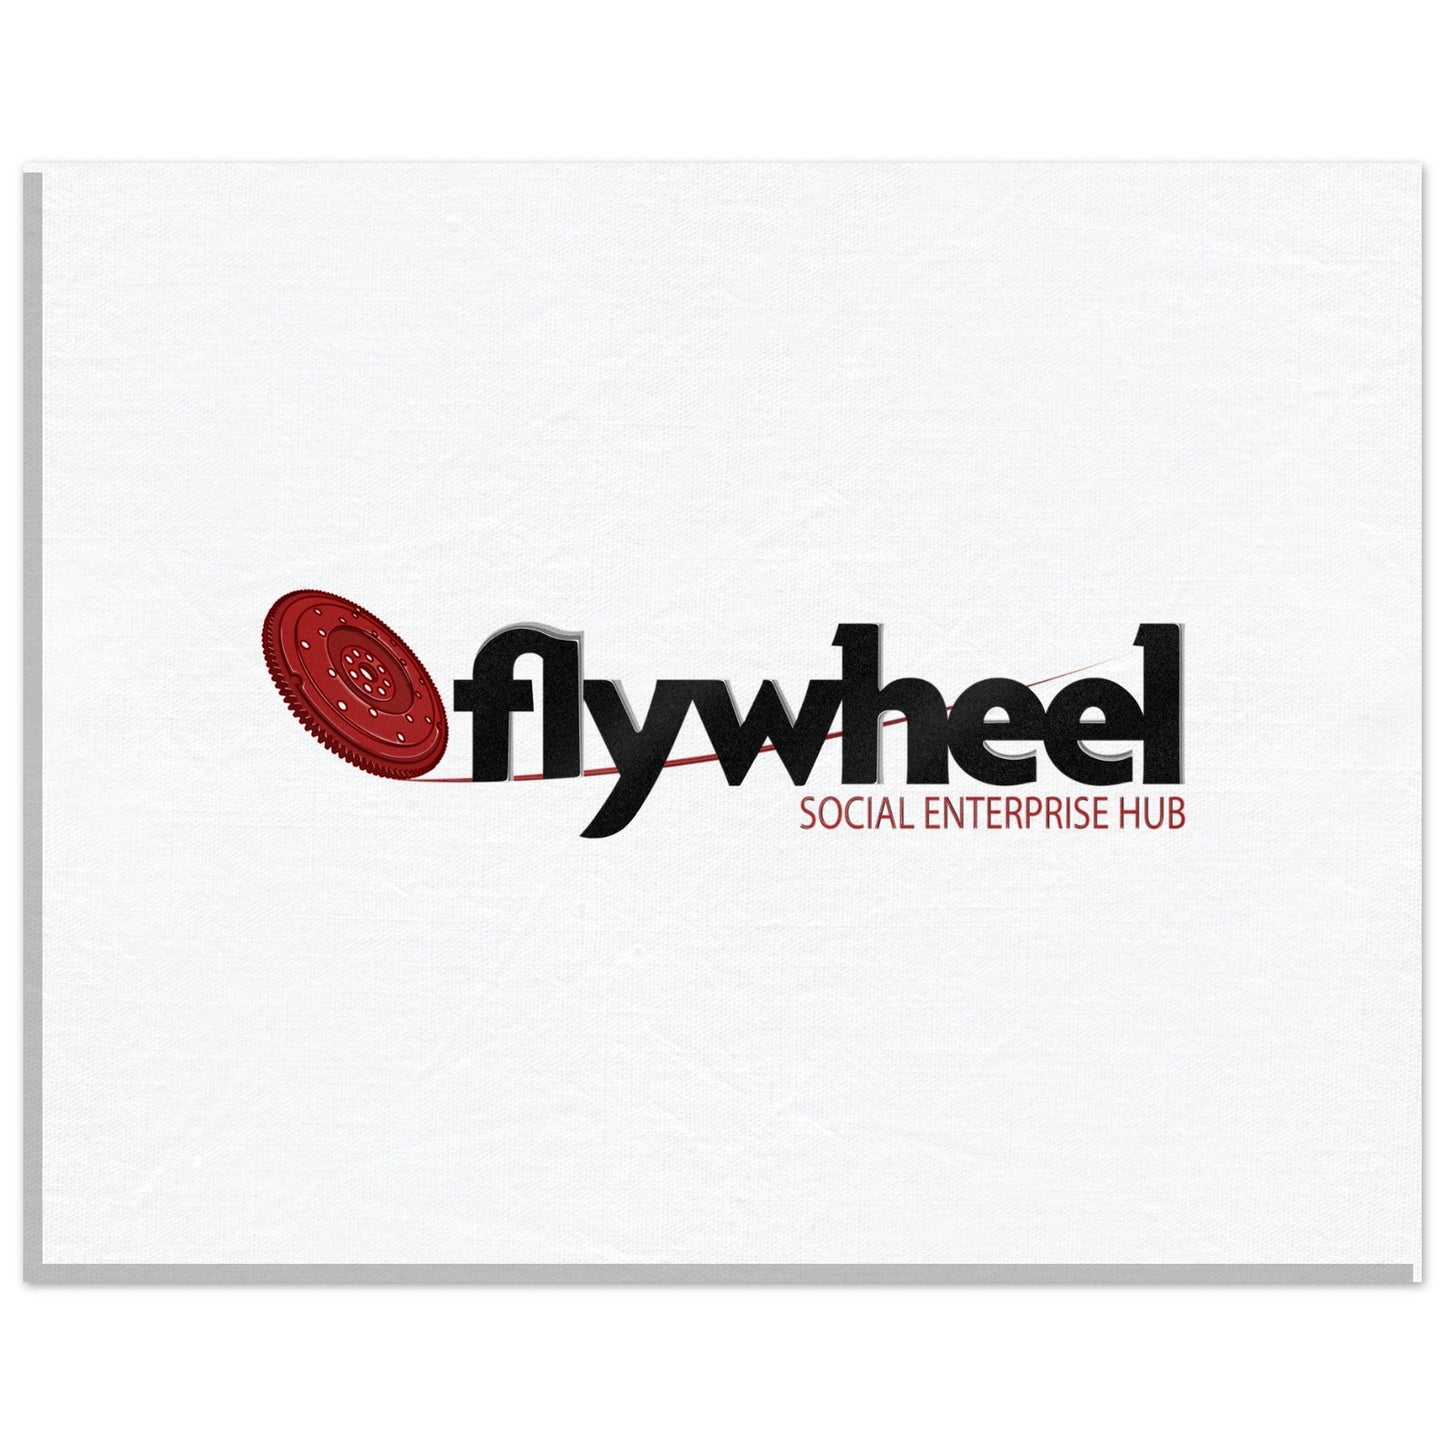 Flywheel Social Enterprise Hub - Canvas